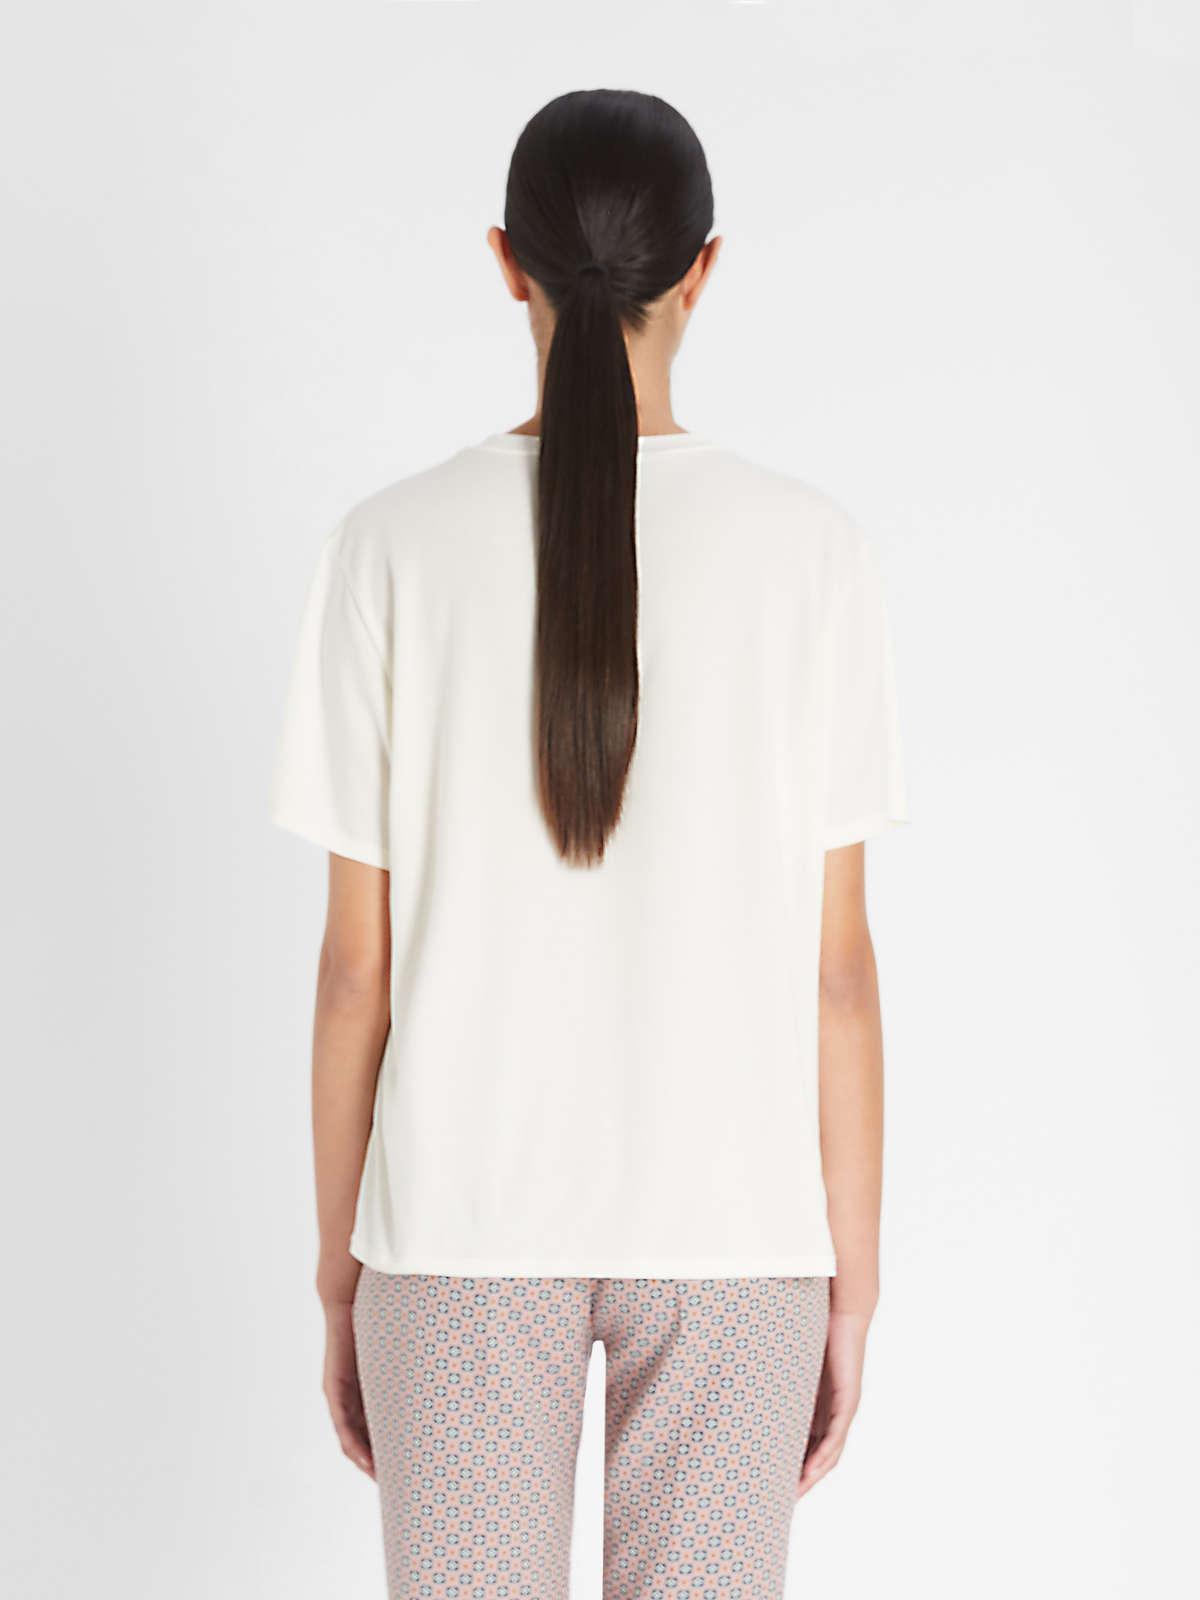 Womens Max Mara Tops And T-Shirts | Silk Crepe De Chine T-Shirt White